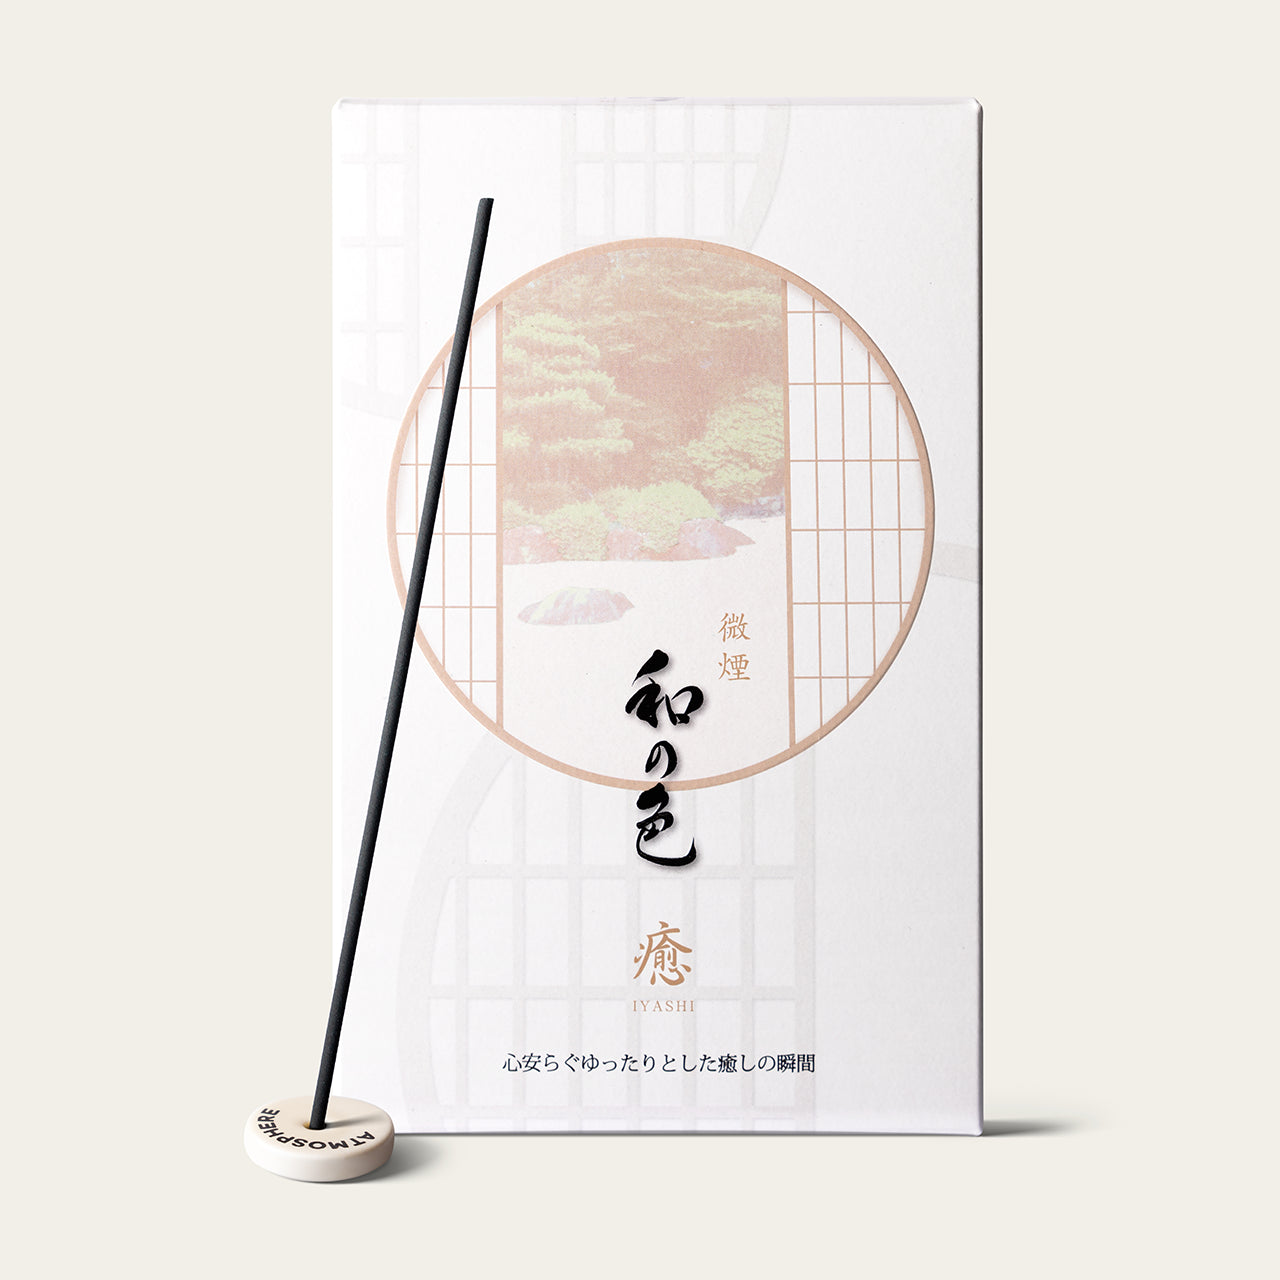 Shorindo Japanese Colours Wa-no-iro Japanese incense sticks (250 sticks) with Atmosphere ceramic incense holder